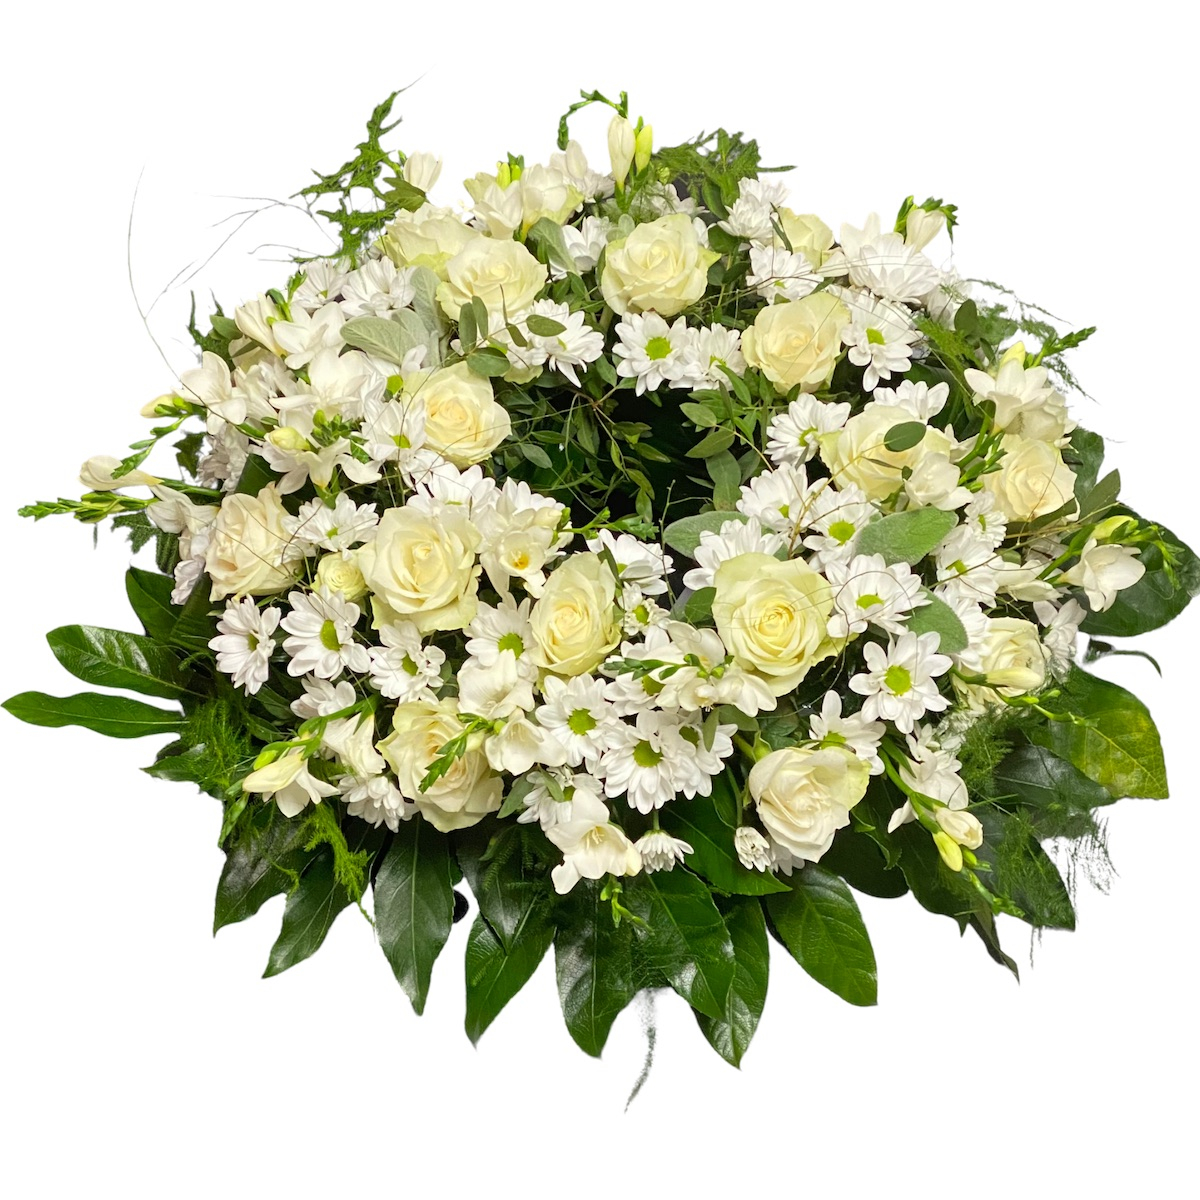 Coroana rotunda flori albe trandafiri, frezii si crizanteme: Funerare